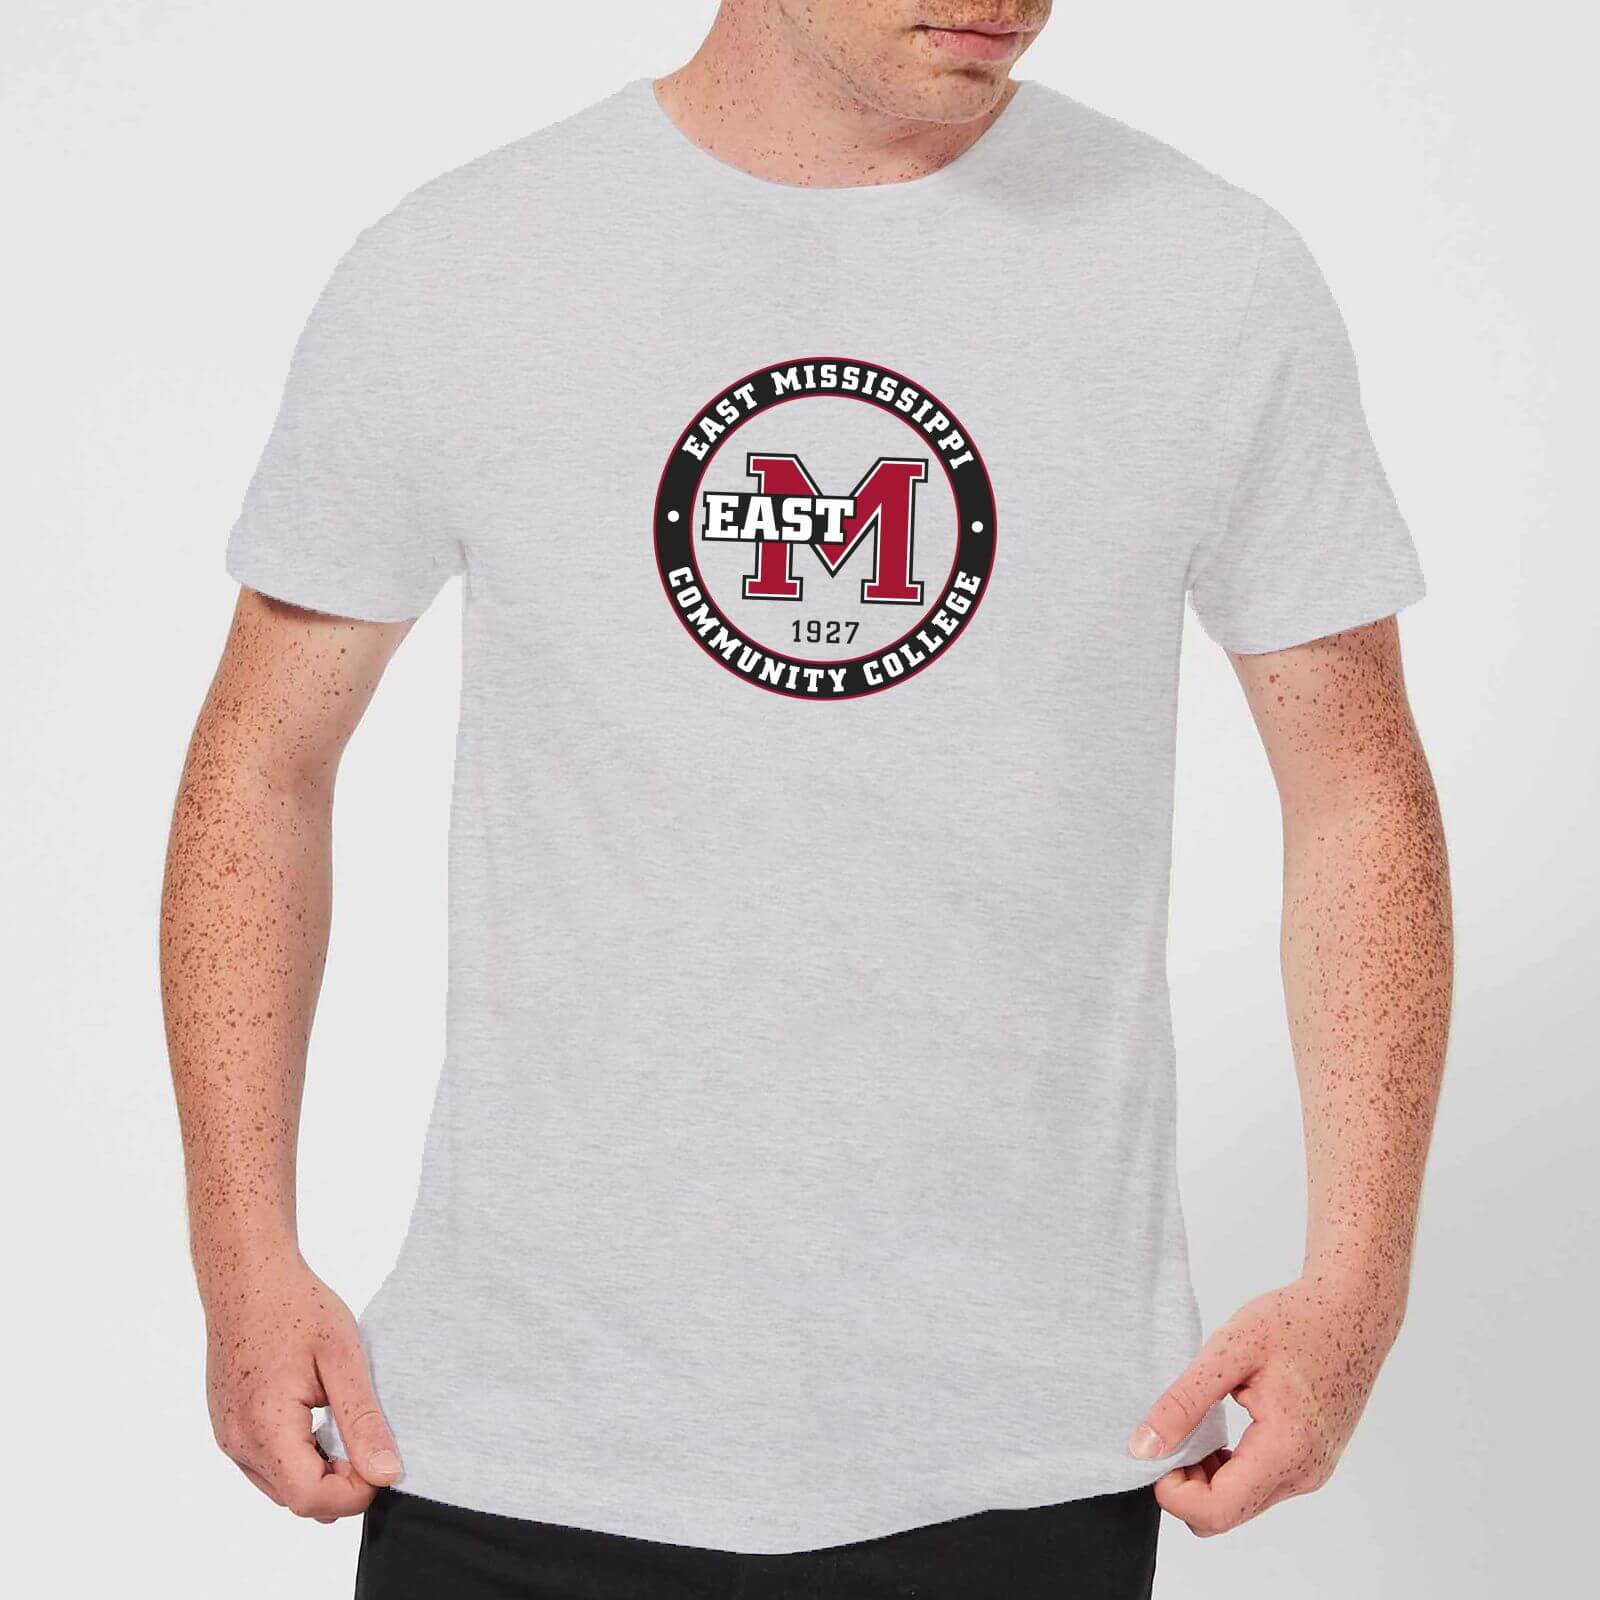 East Mississippi Community College Seal Men's T-Shirt - Grey - S